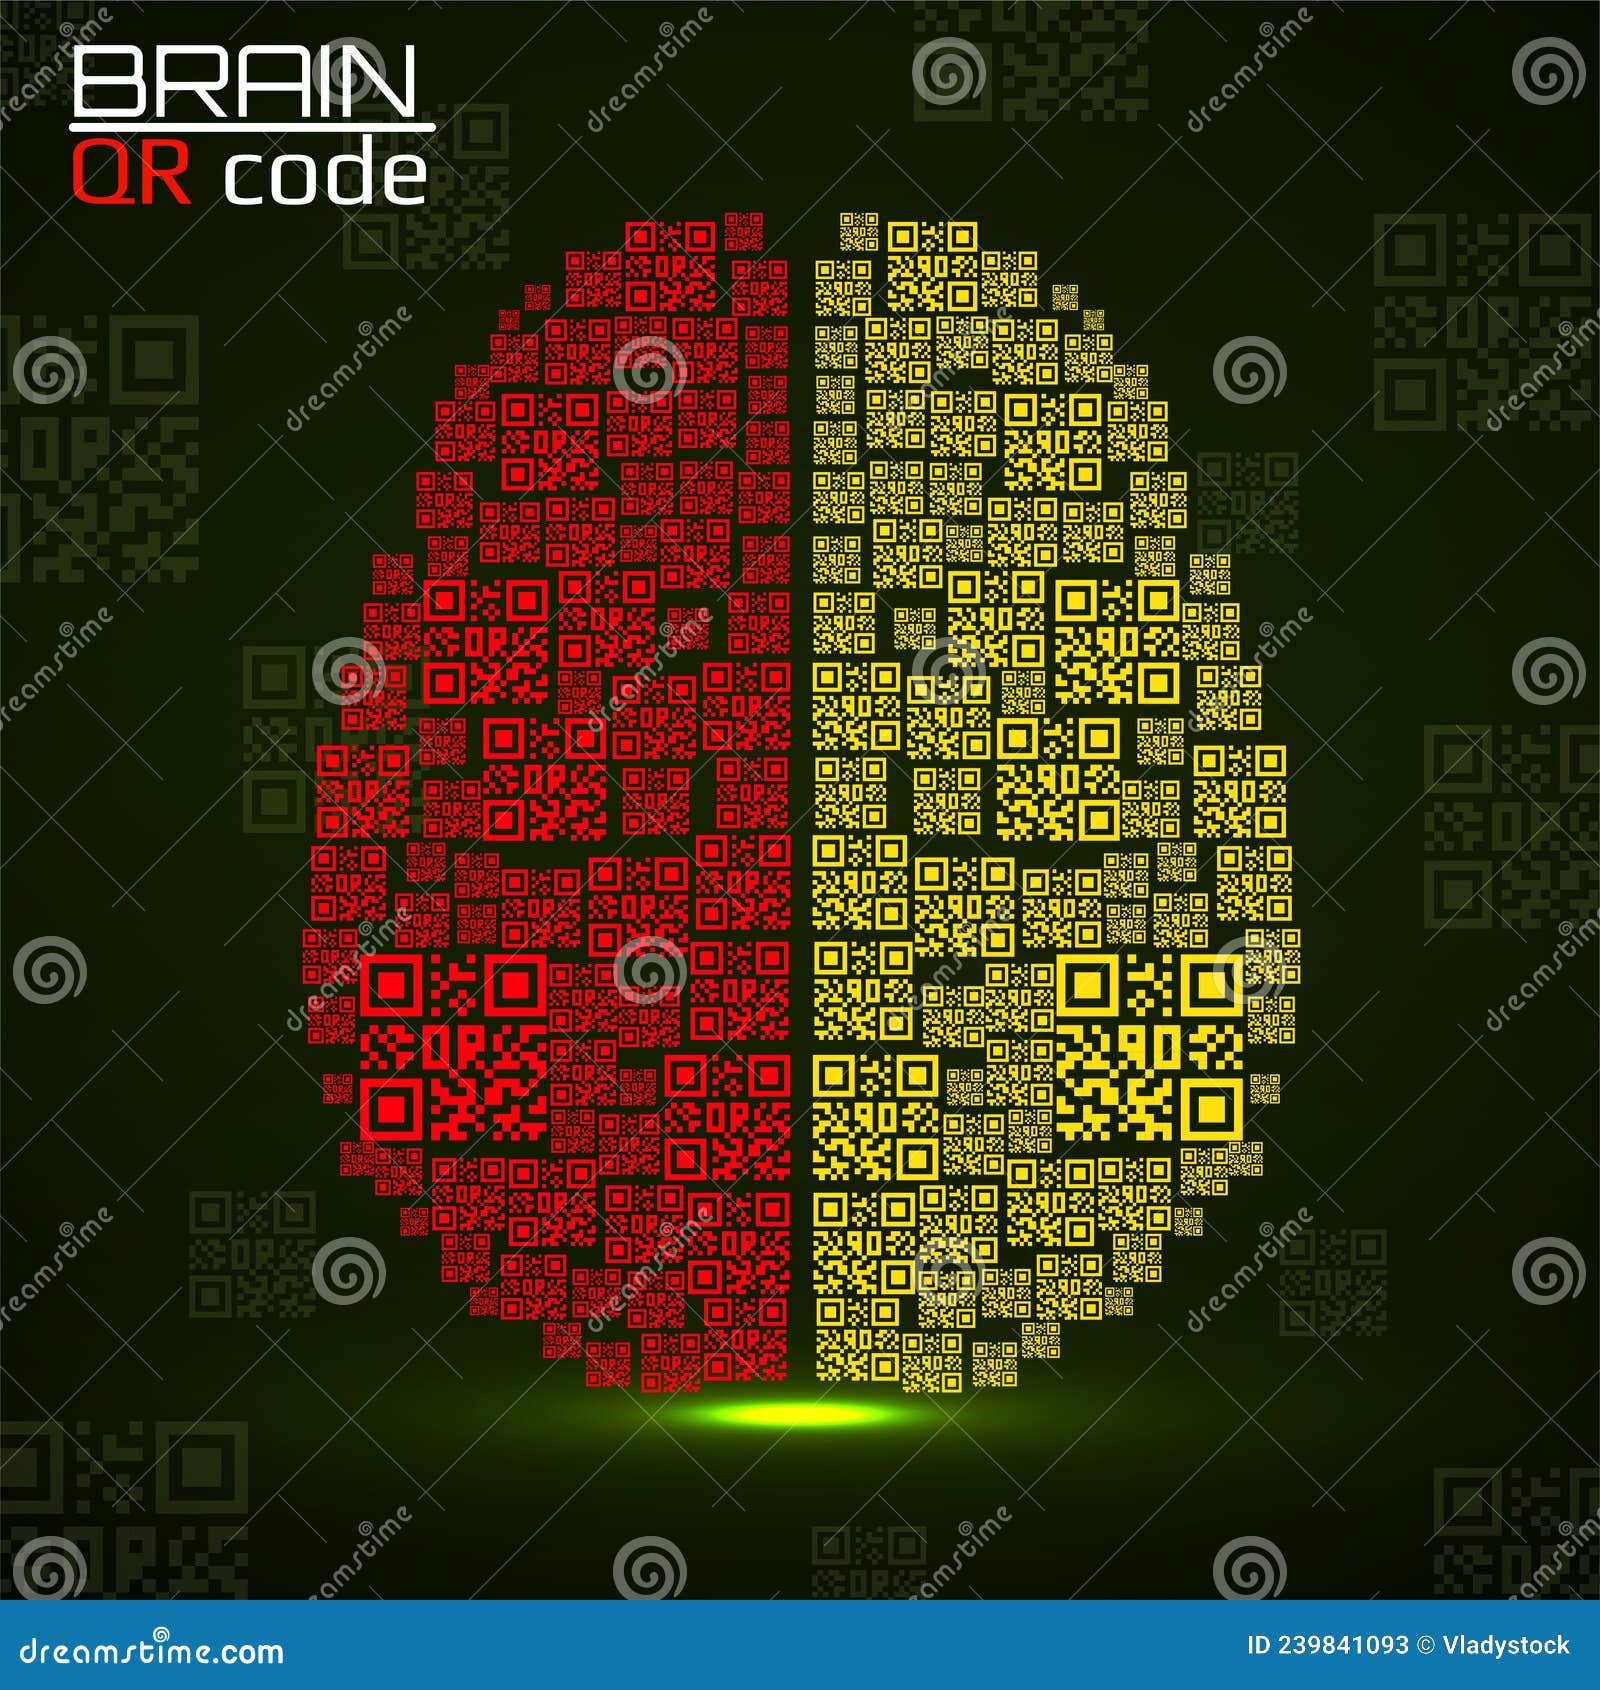 QR code brain. Silhouette human brain with qr code. Technology concept. Vector illustration